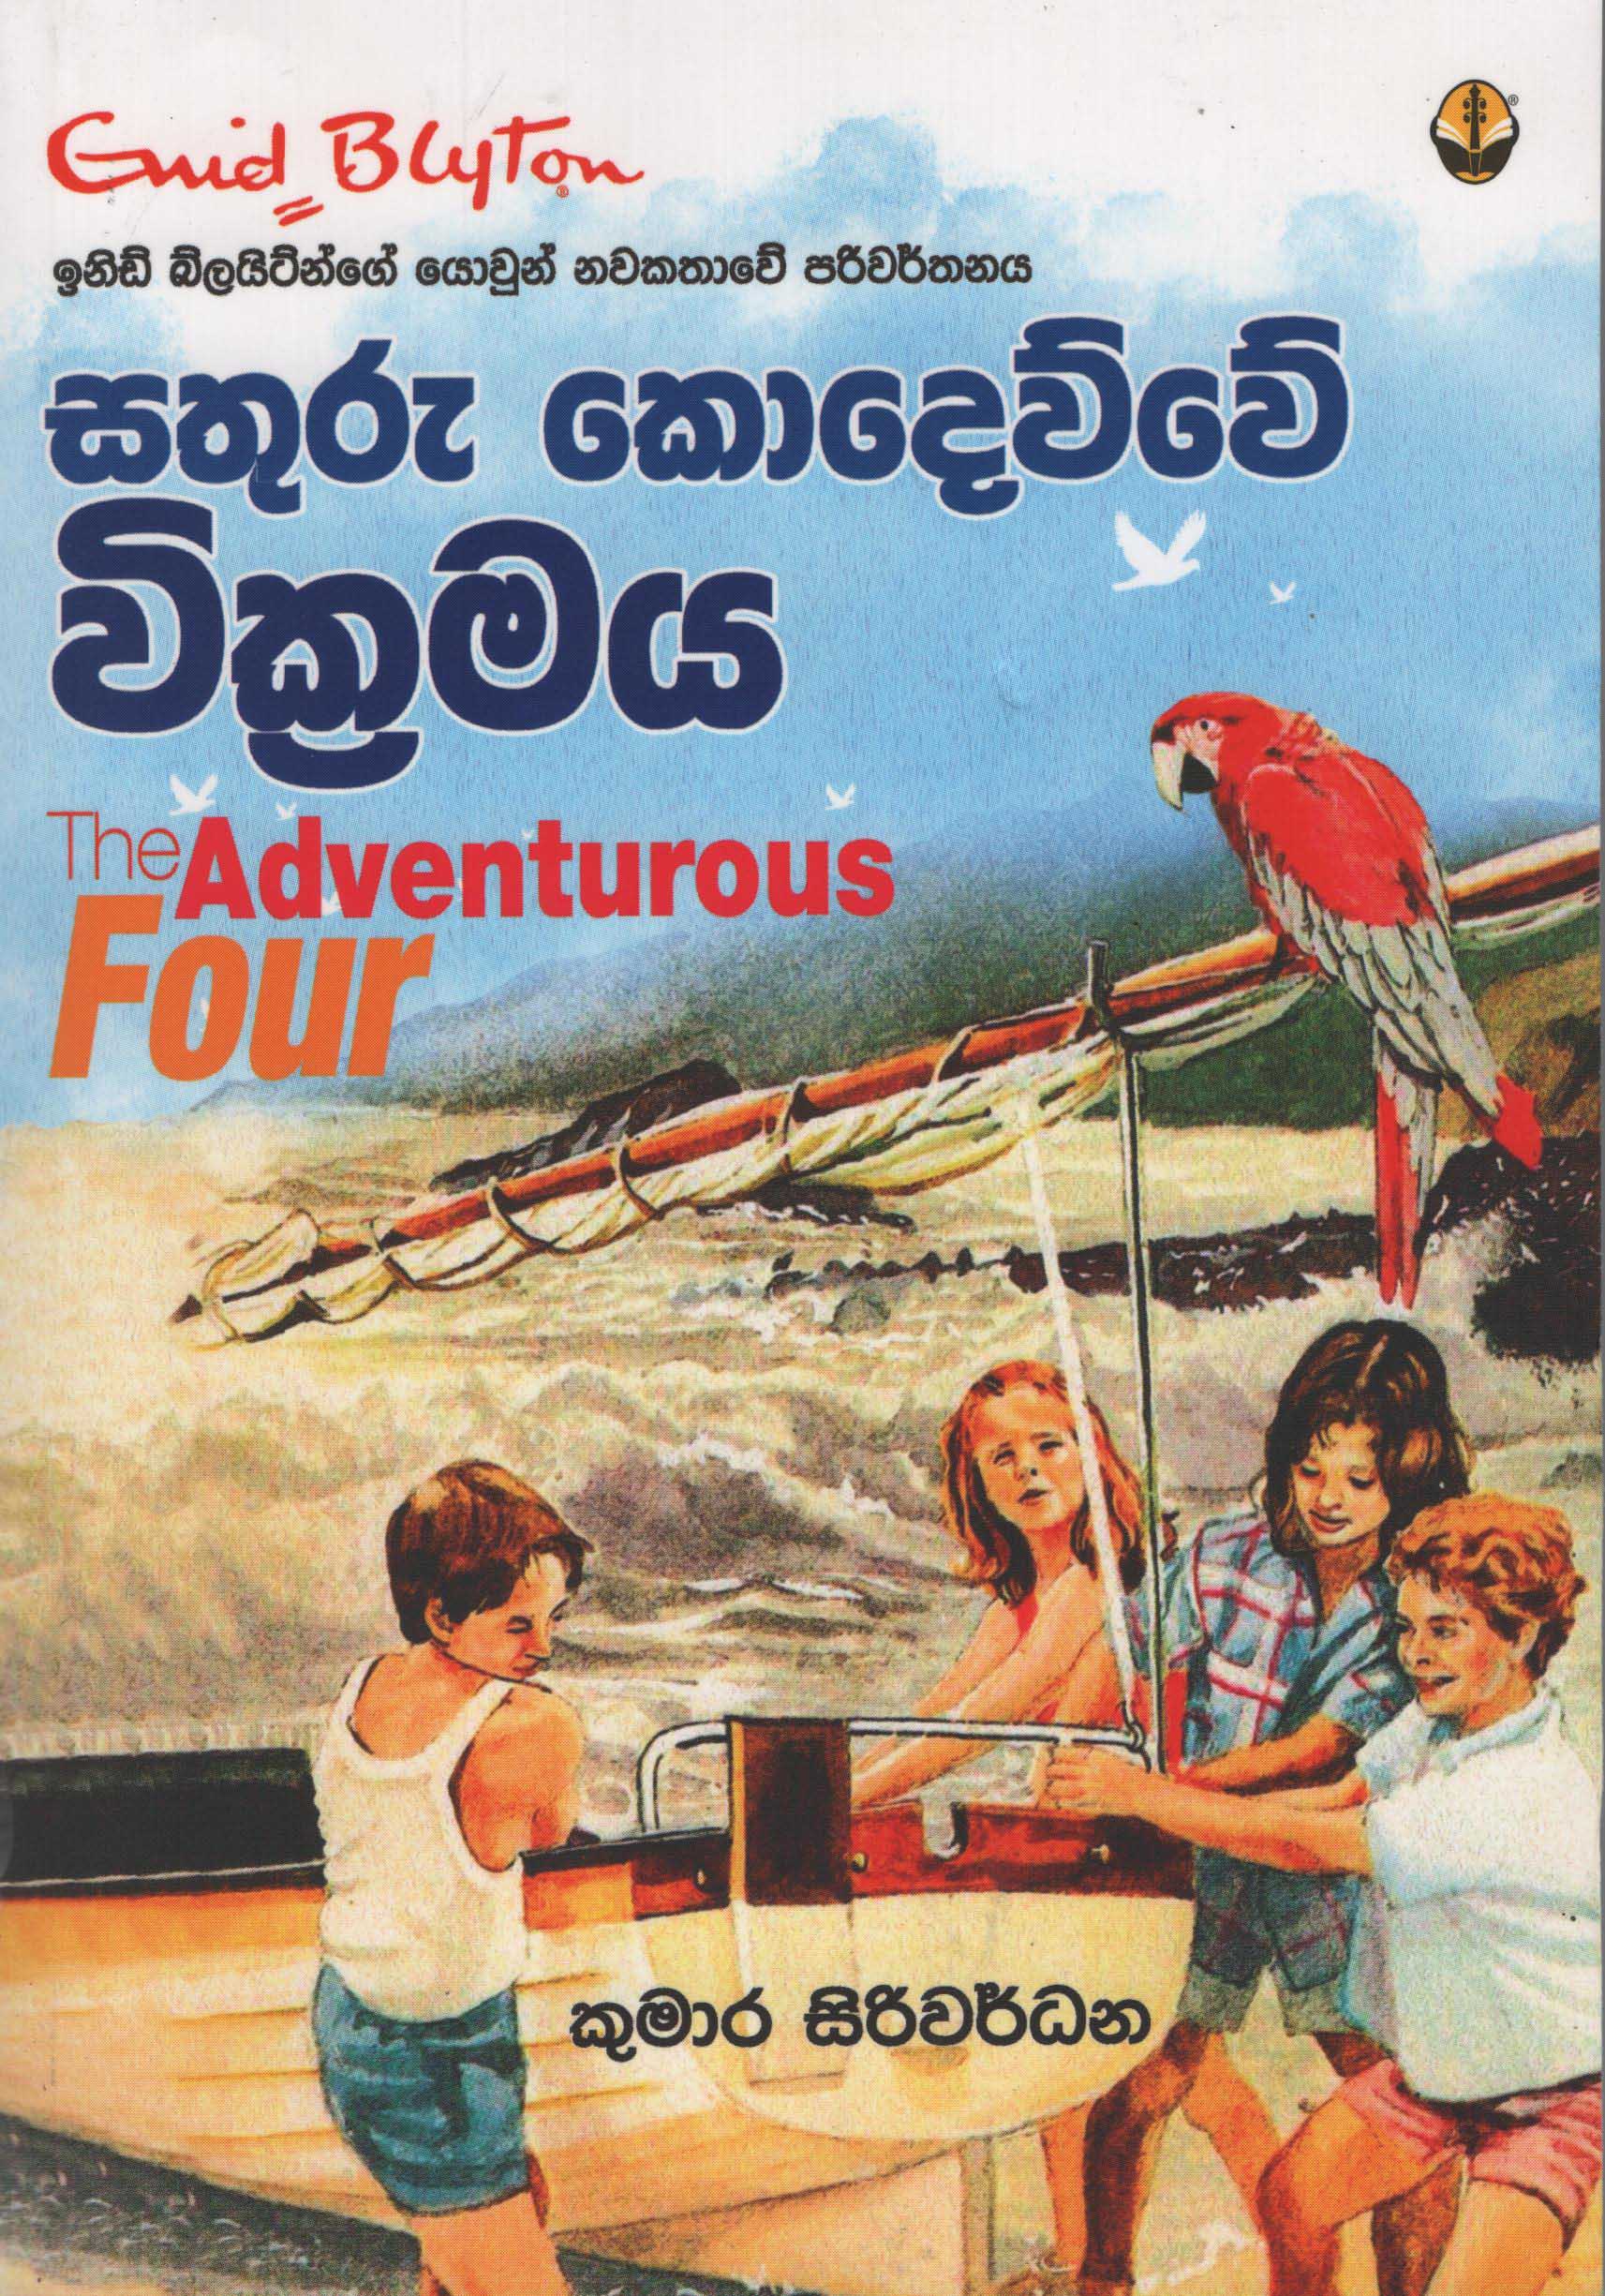 Sathuru Kodeuwe Vikramaya Translation of The Adventurous Four By Enid Blyton